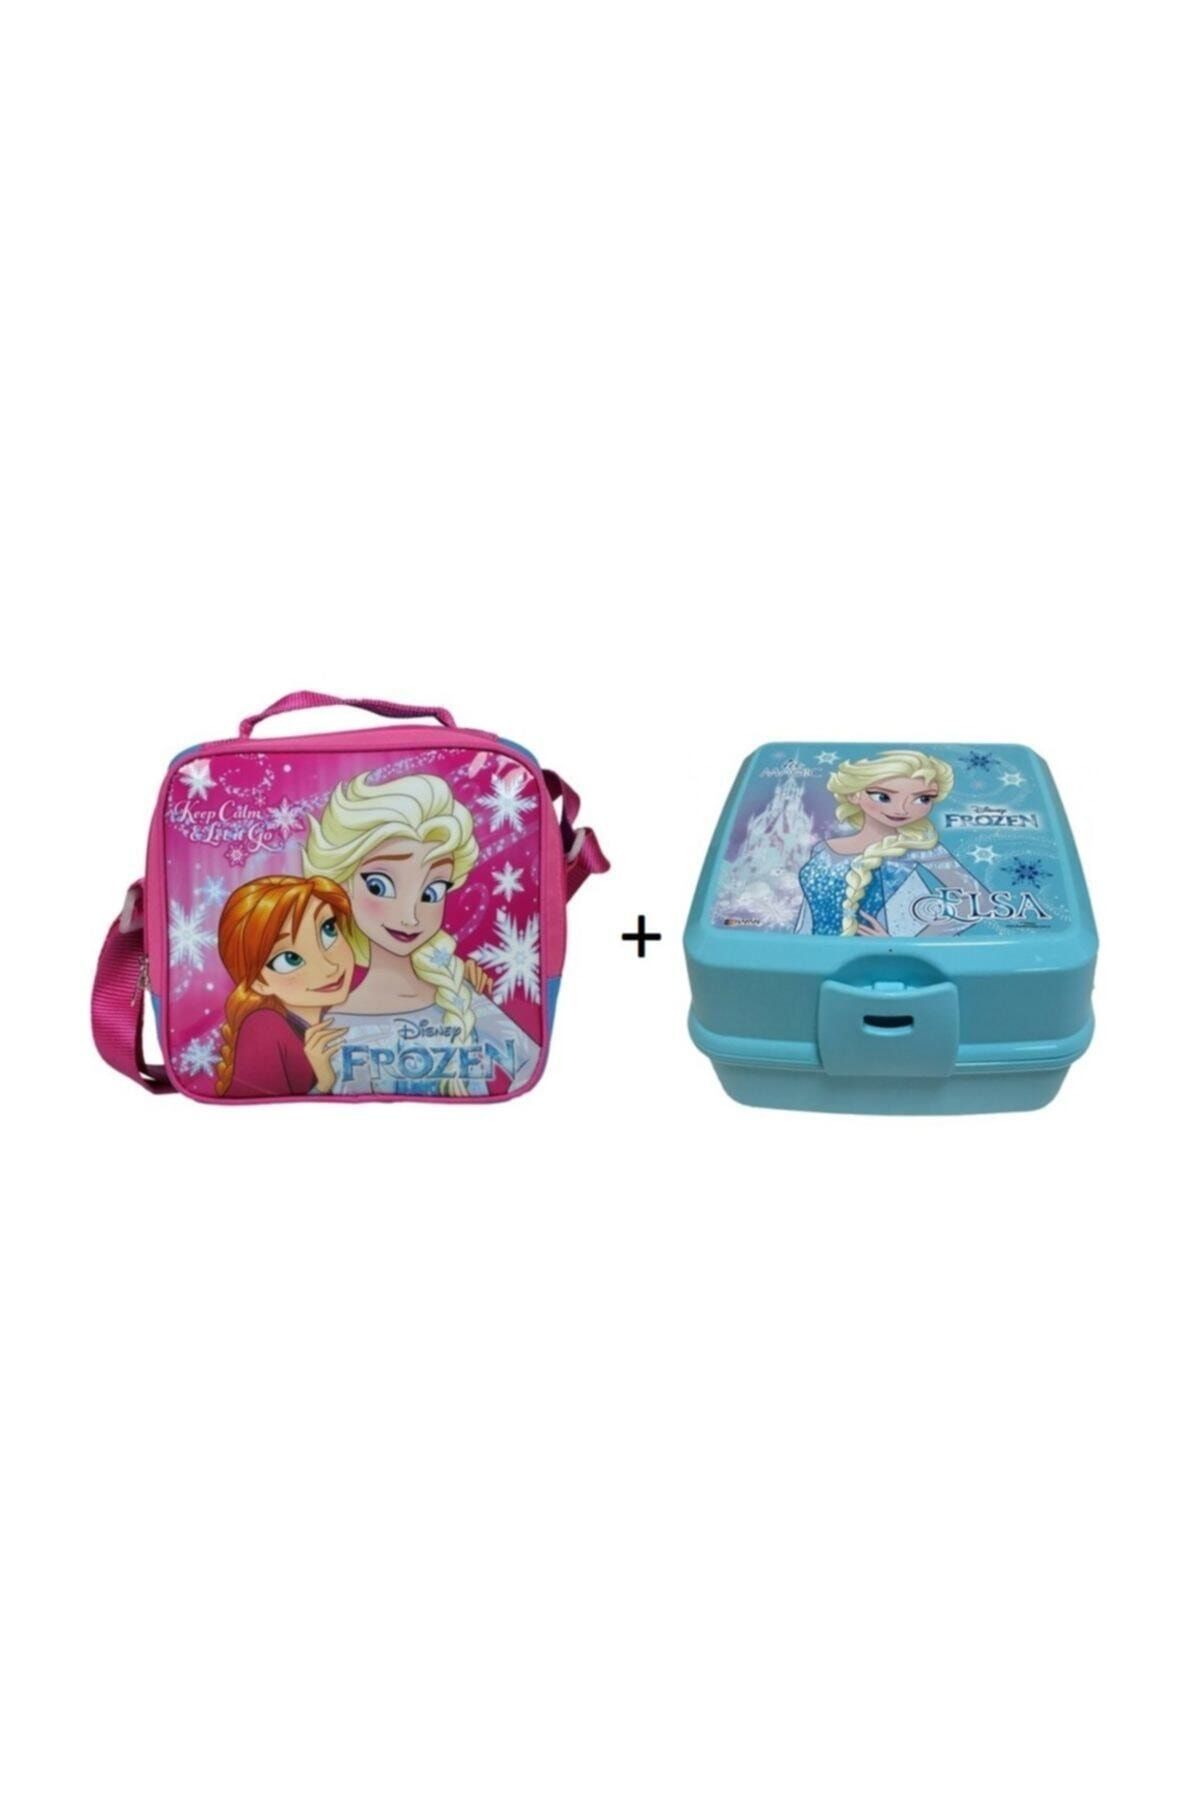 Hakan Çanta Disney Frozen Elsa Beslenme Çantası Beslenme Kabı Beslenme Kutusu